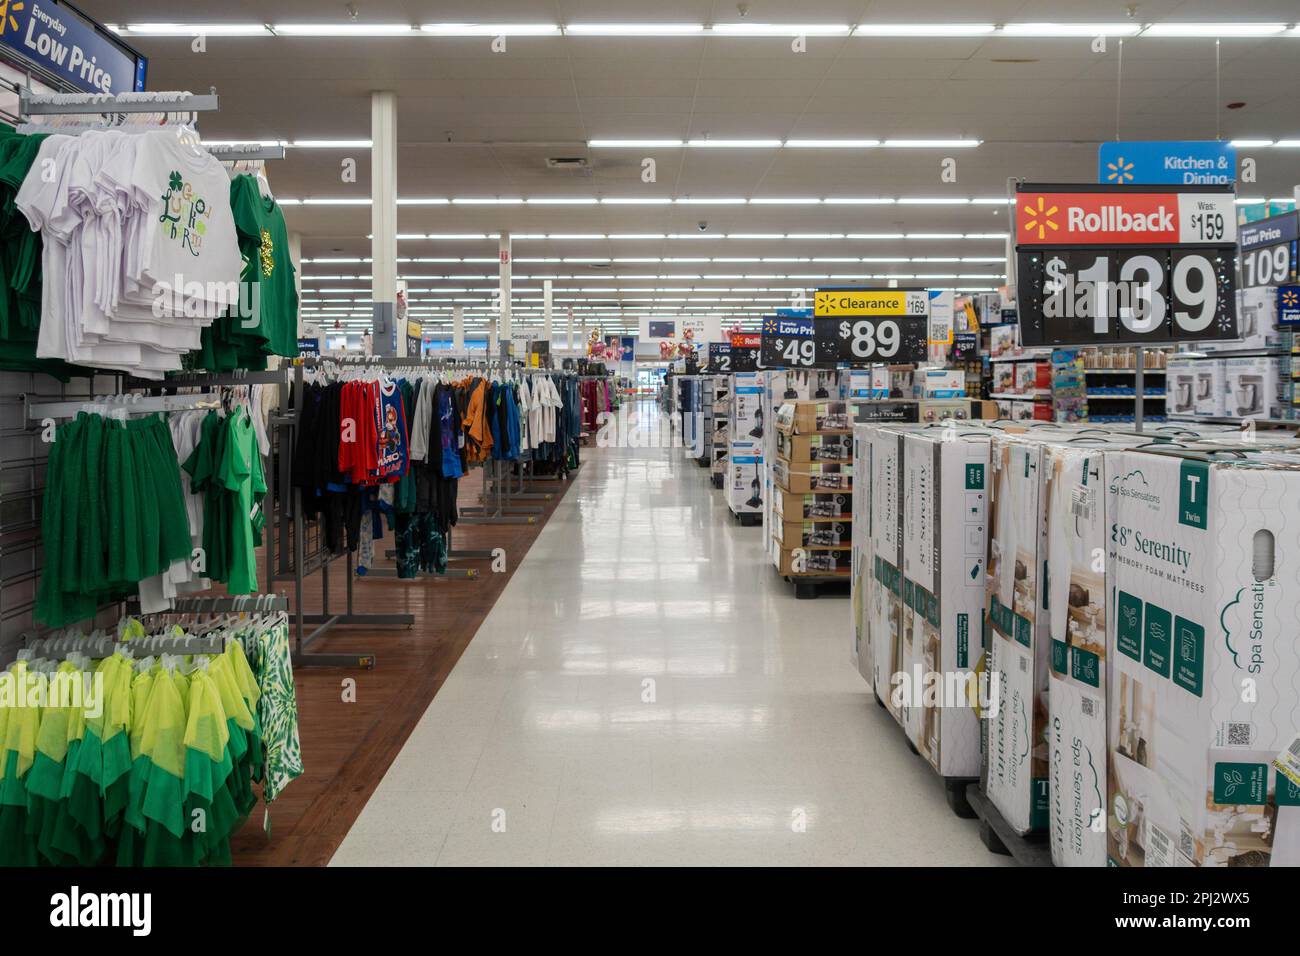 Interior of a Walmart super center showing an aisle with children’s clothing & foam mattresses. Wichita, Kansas, USA. Stock Photo